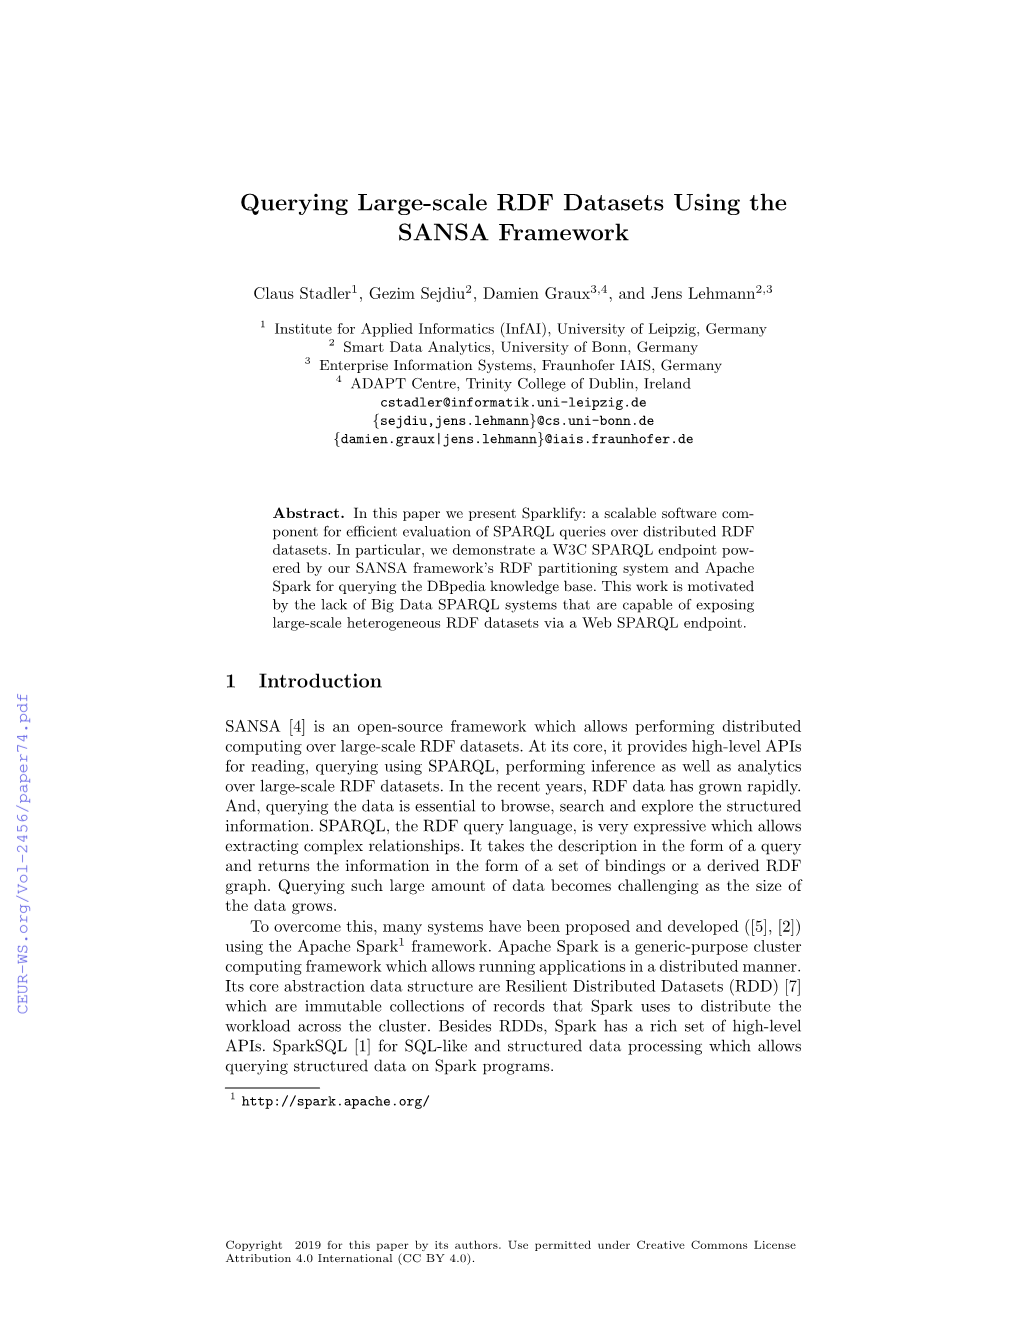 Querying Large-Scale RDF Datasets Using the SANSA Framework